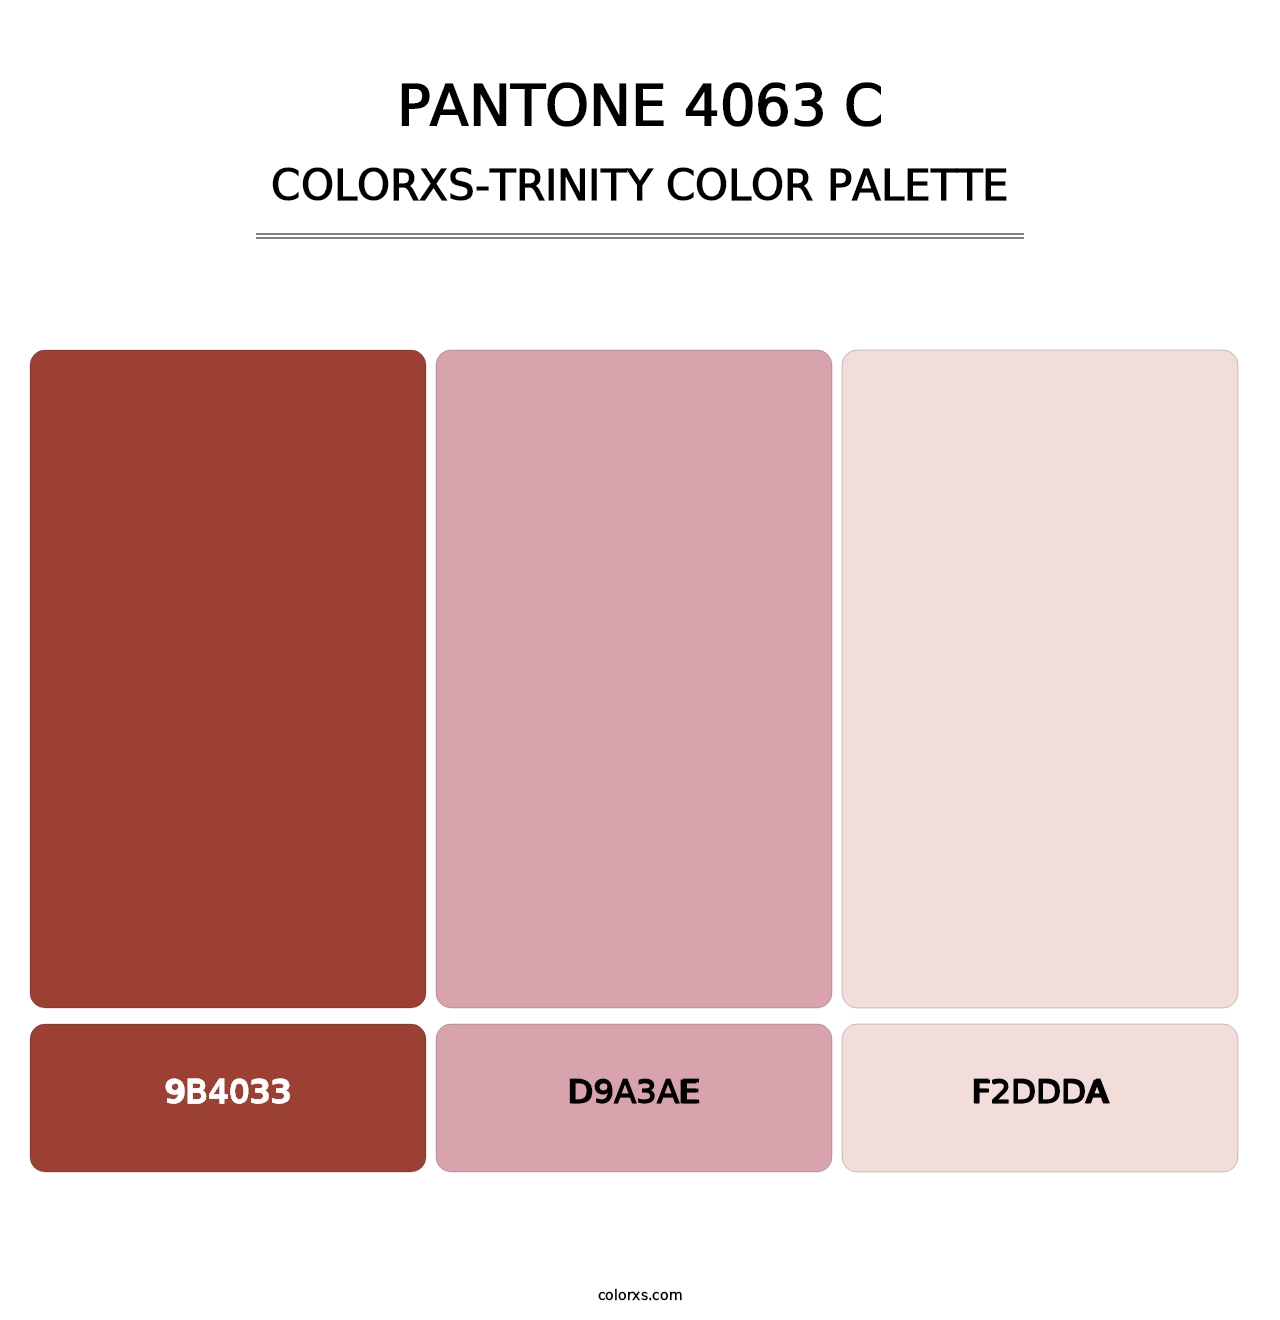 PANTONE 4063 C - Colorxs Trinity Palette